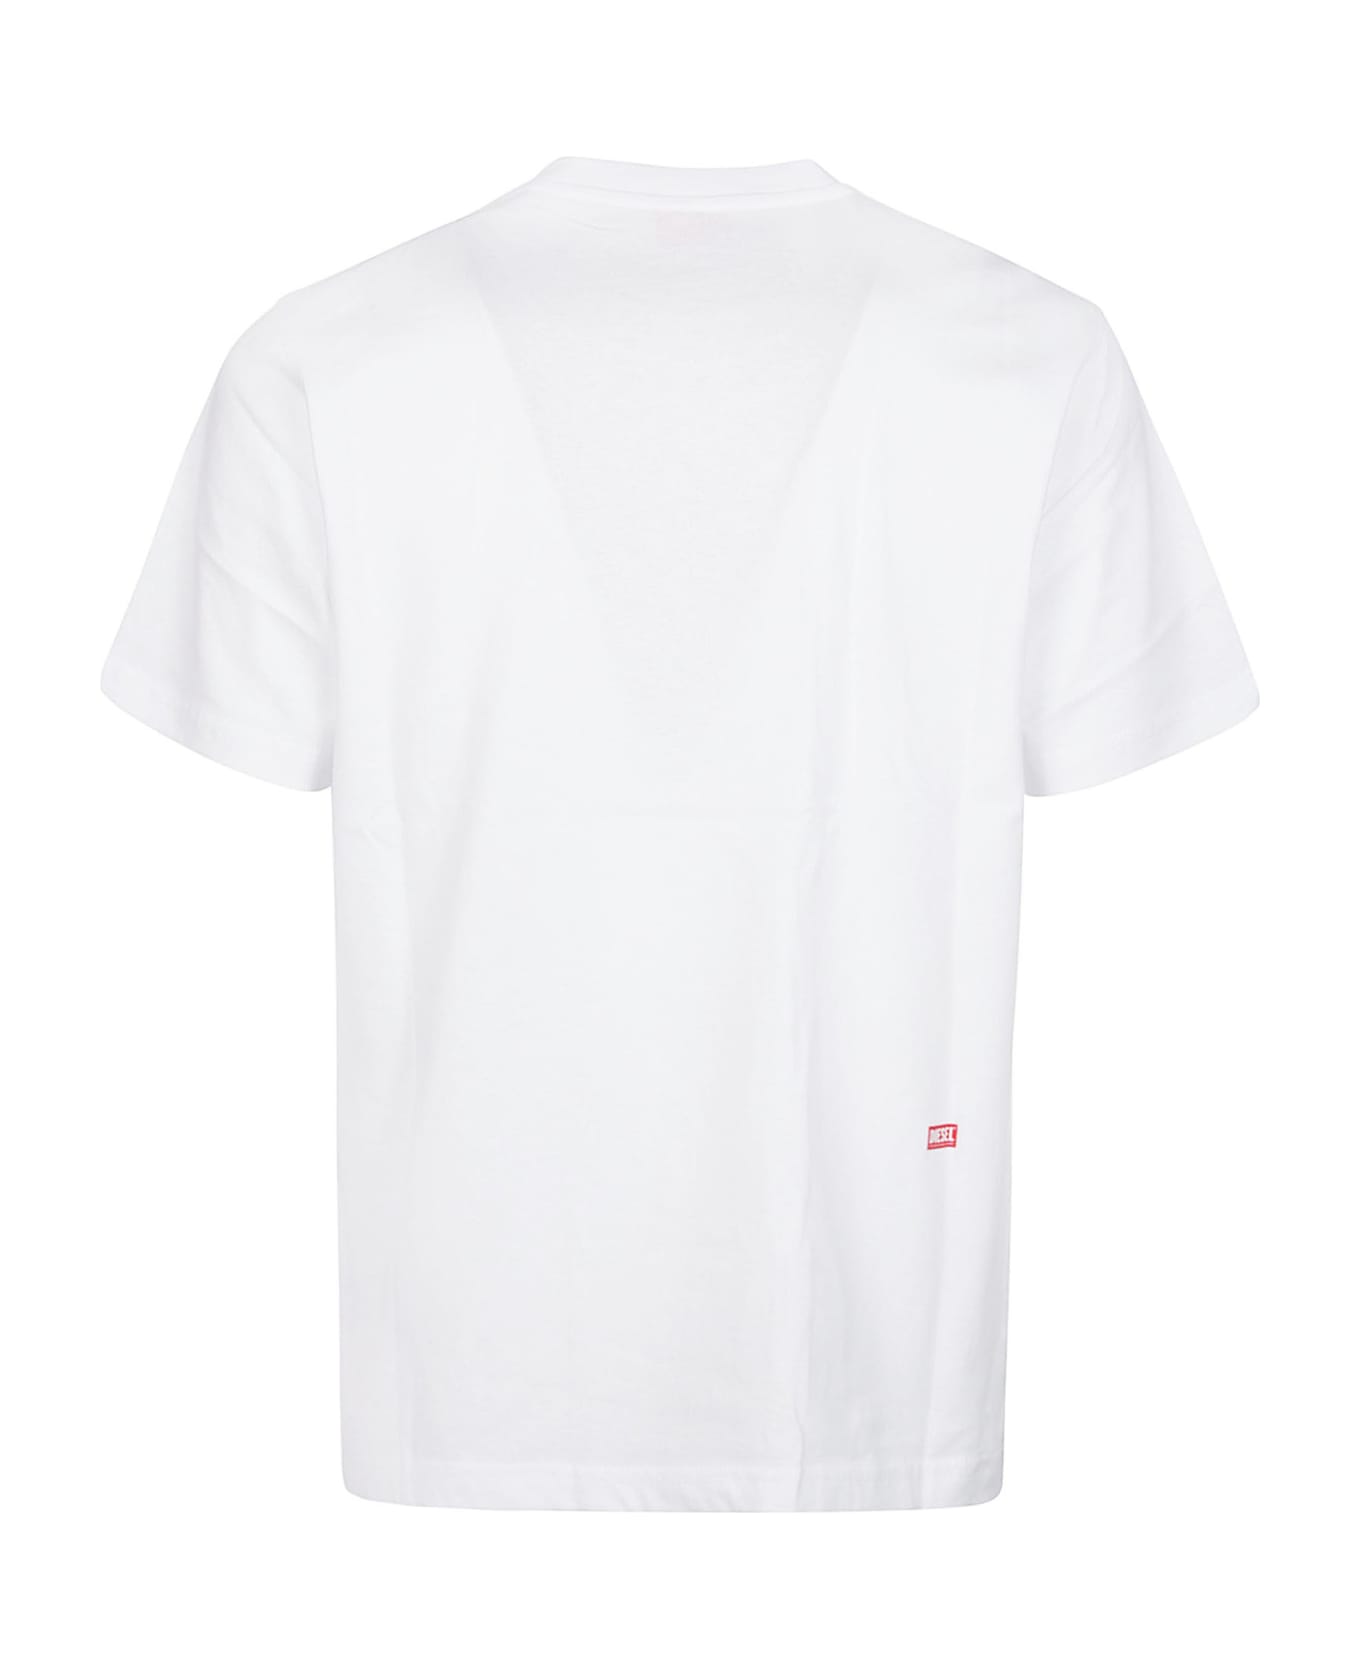 Diesel T-just N11 T-shirt - White